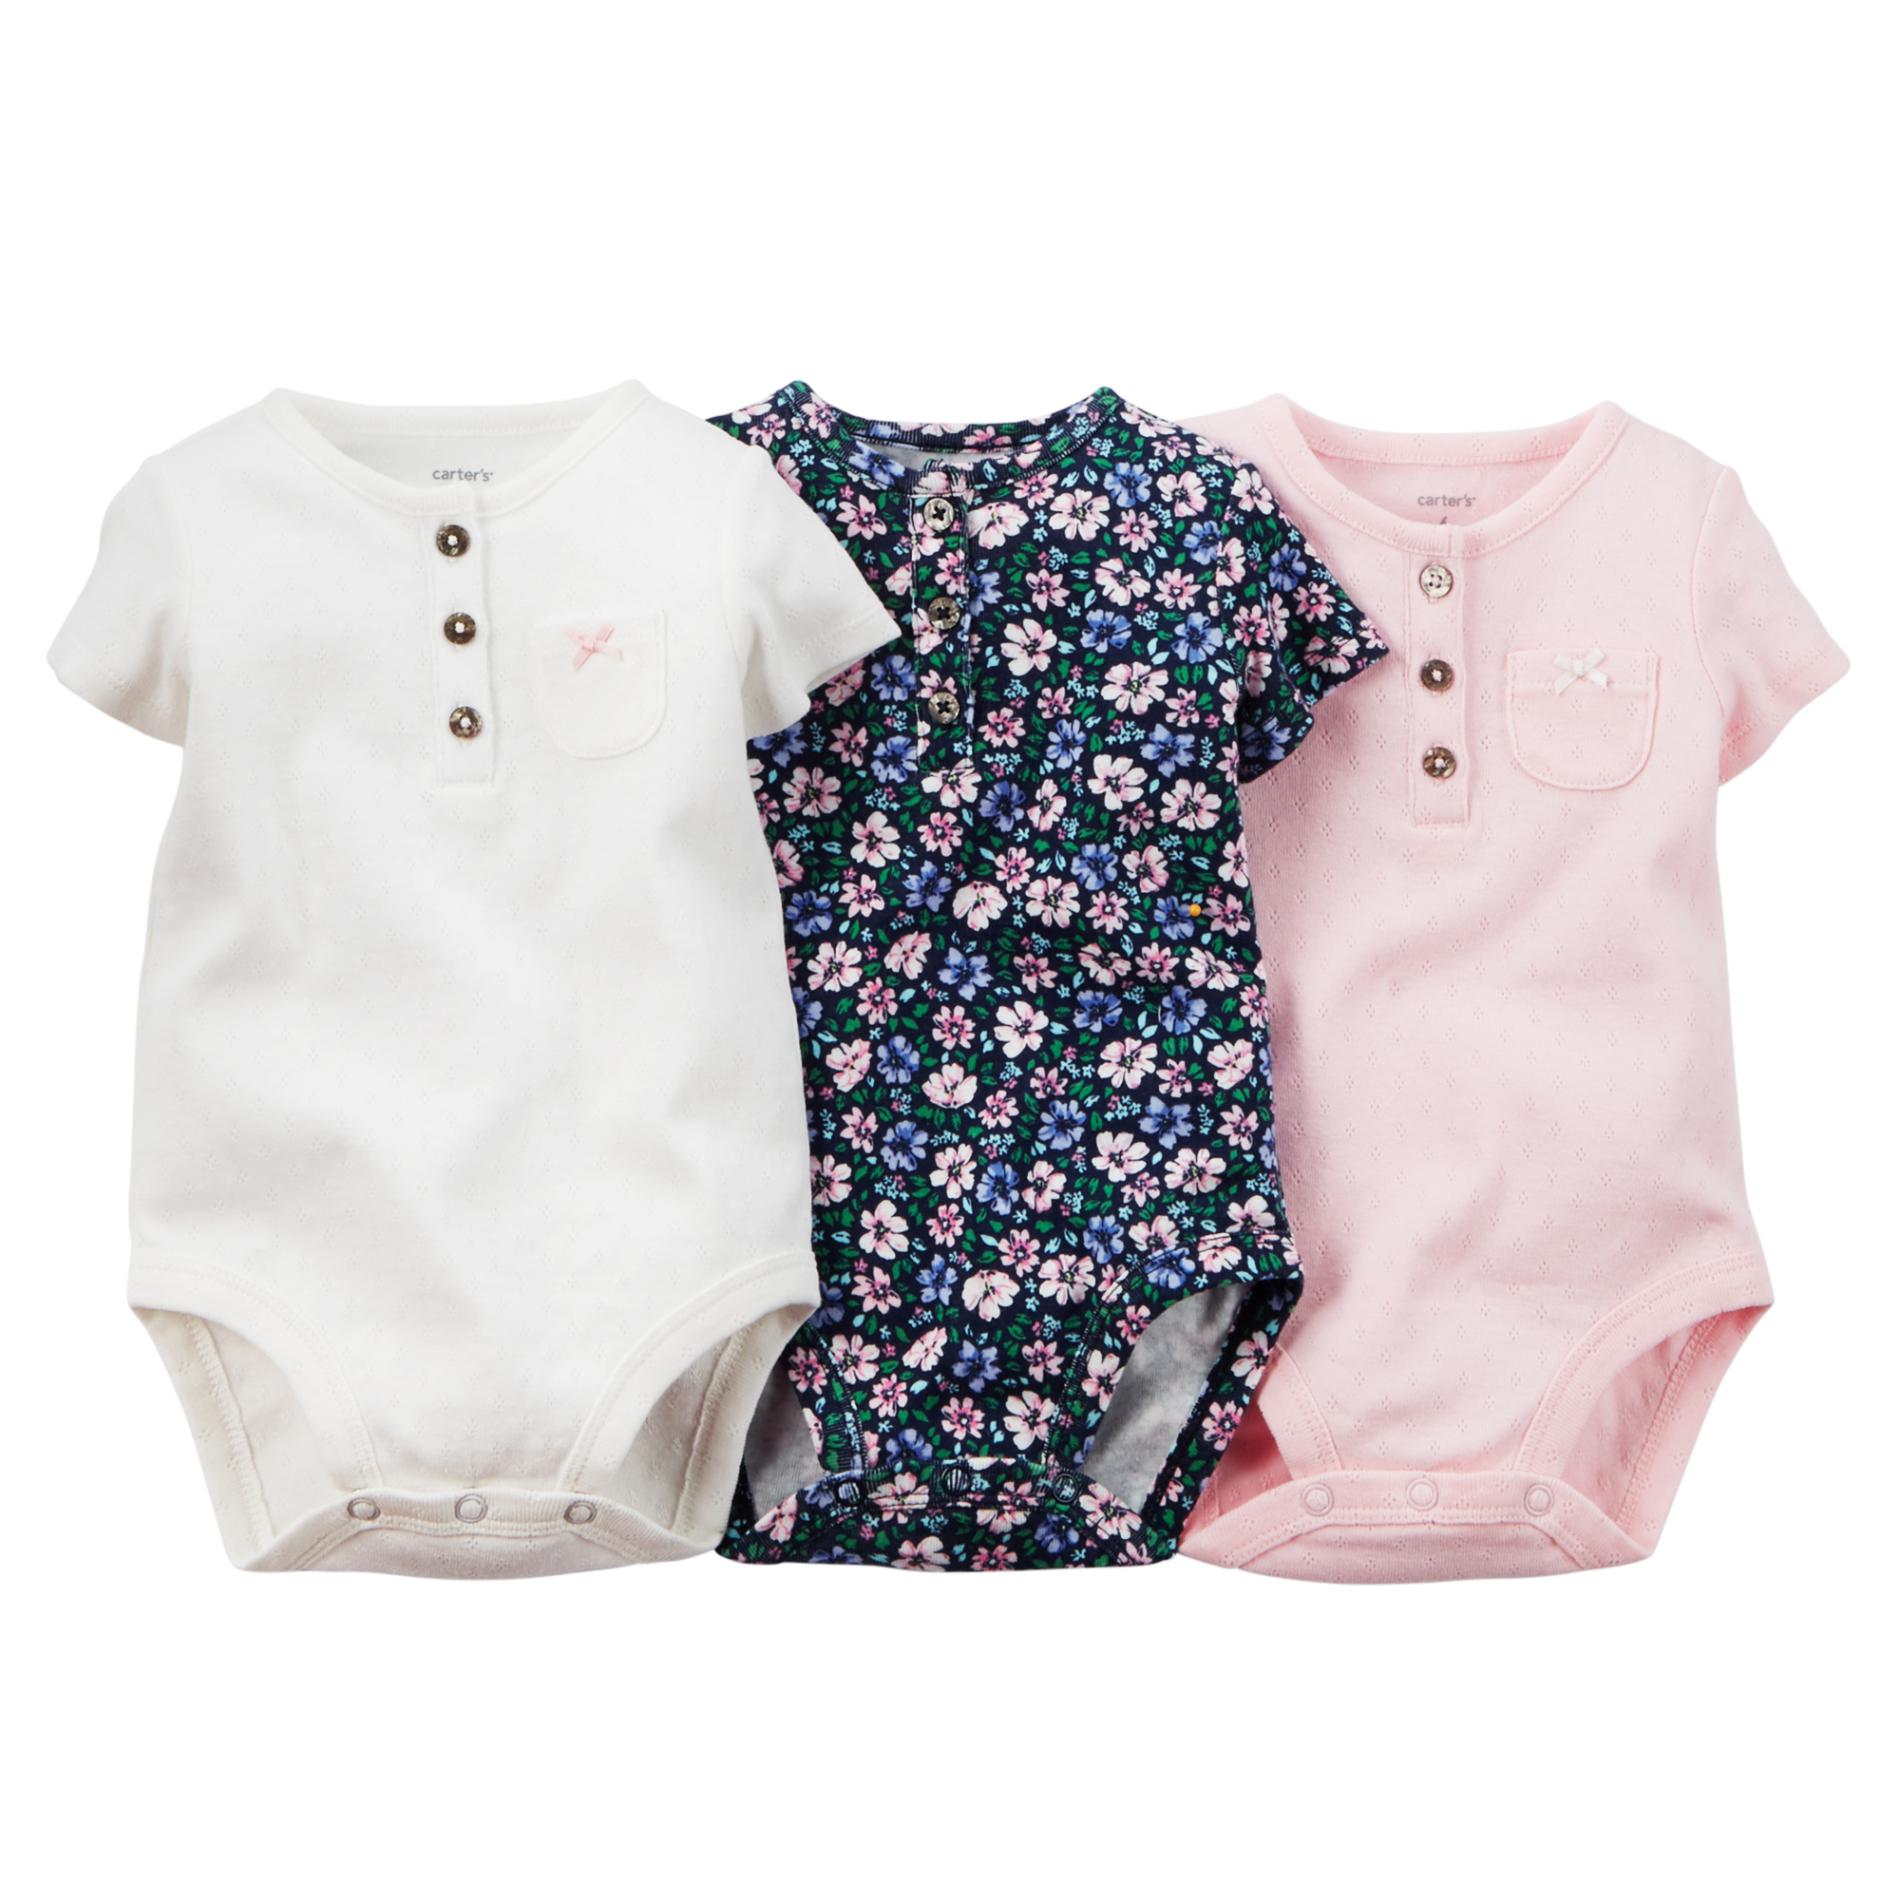 Carter's Newborn & Infant Girl's 3-Pack Bodysuits - Solid & Floral